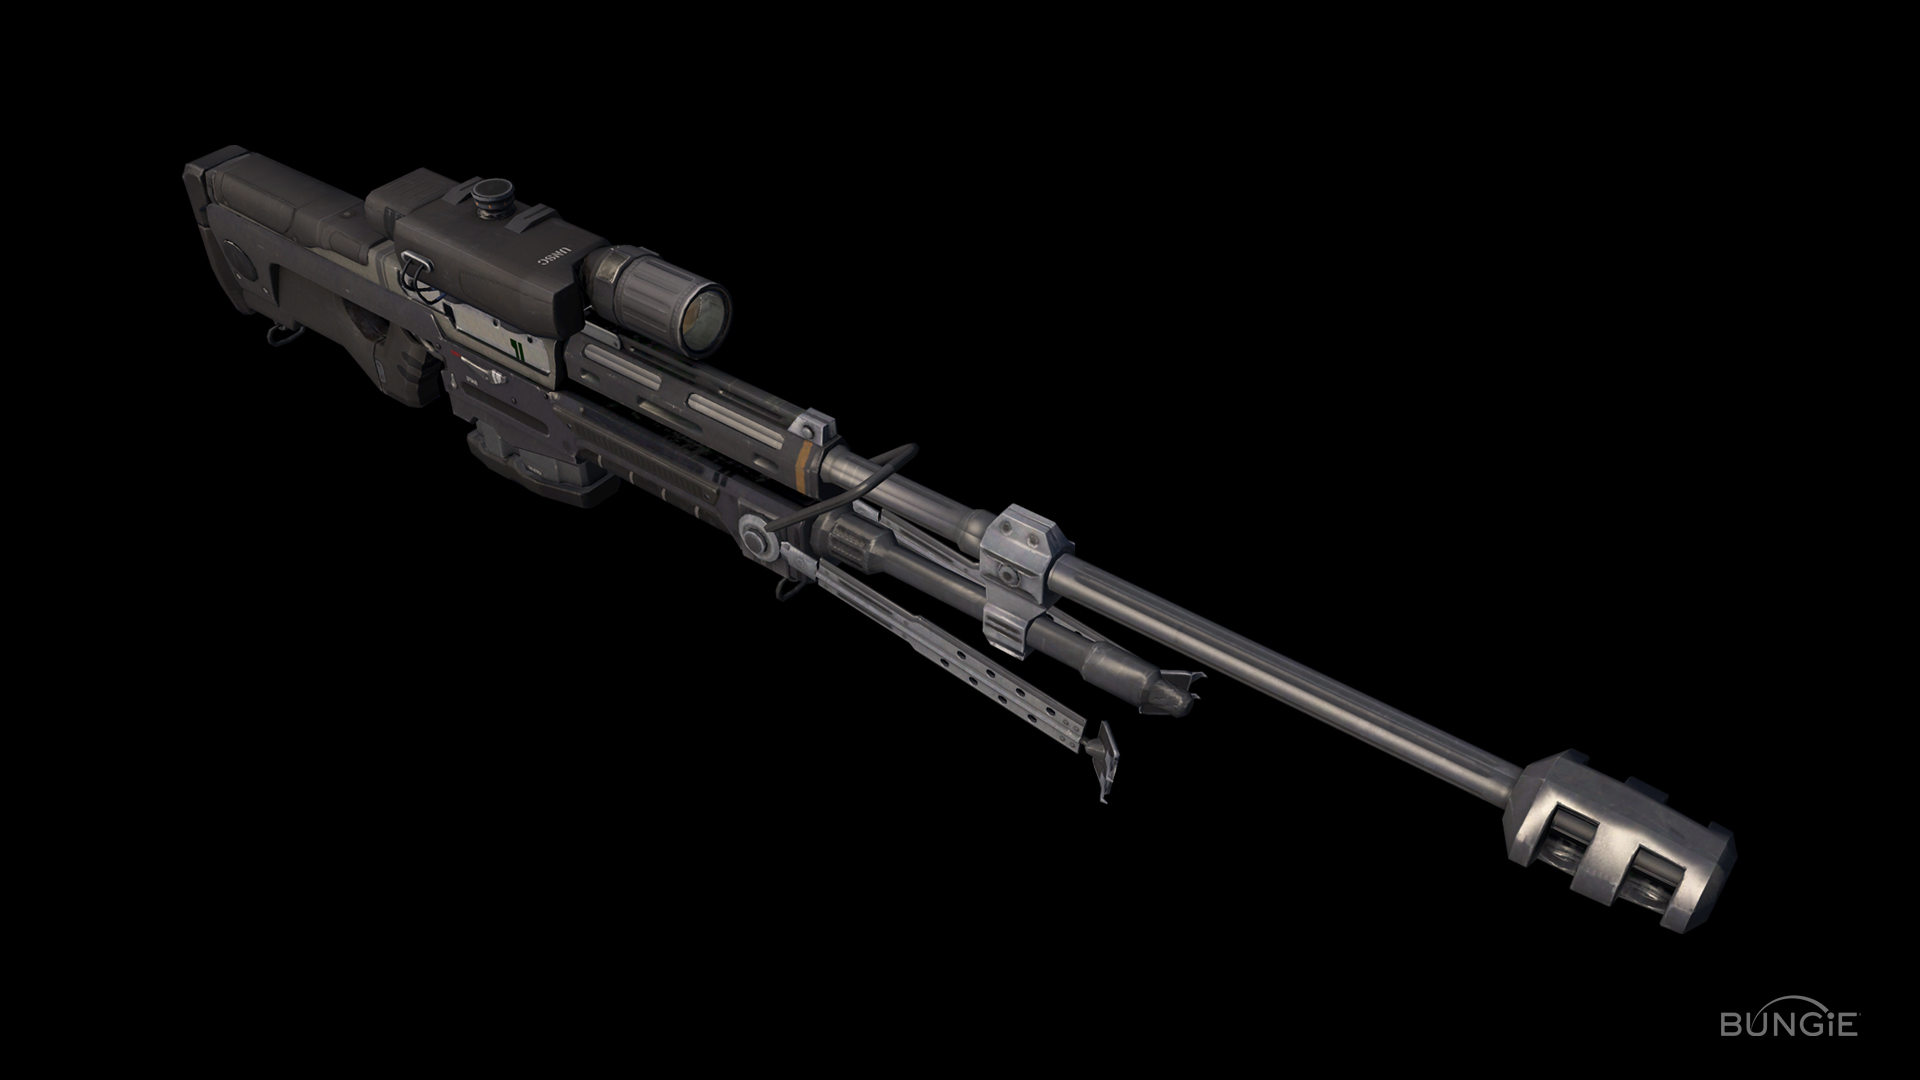 Halo Reach Sniper Rifle wallpaper 31059 1920x1080